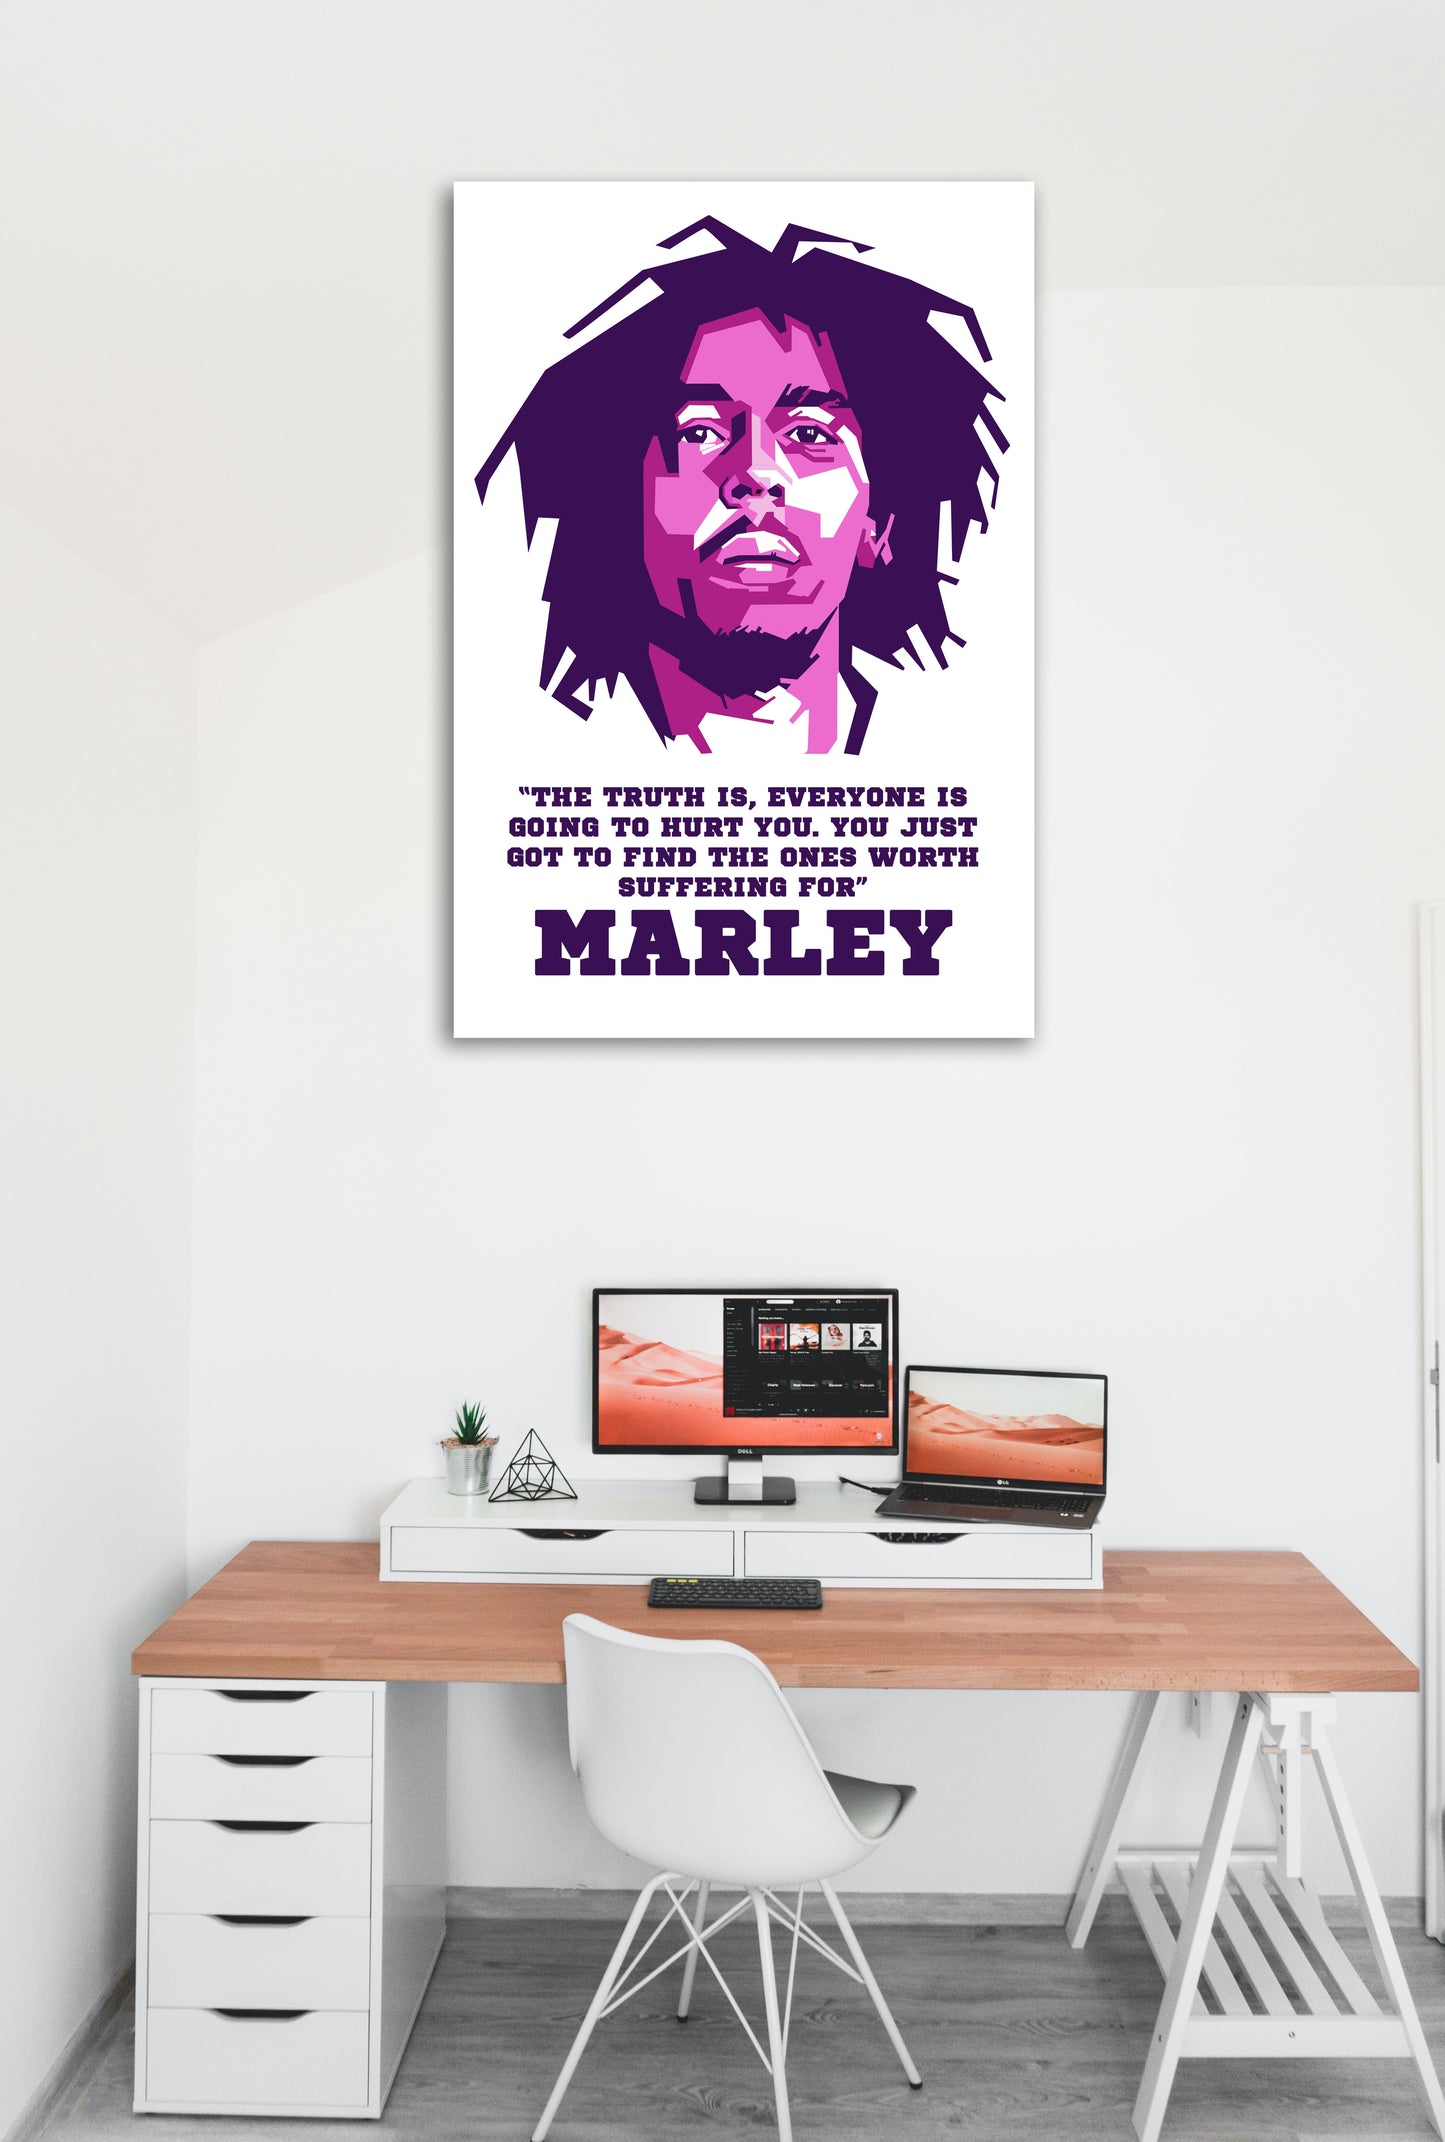 Bob Marley Art work